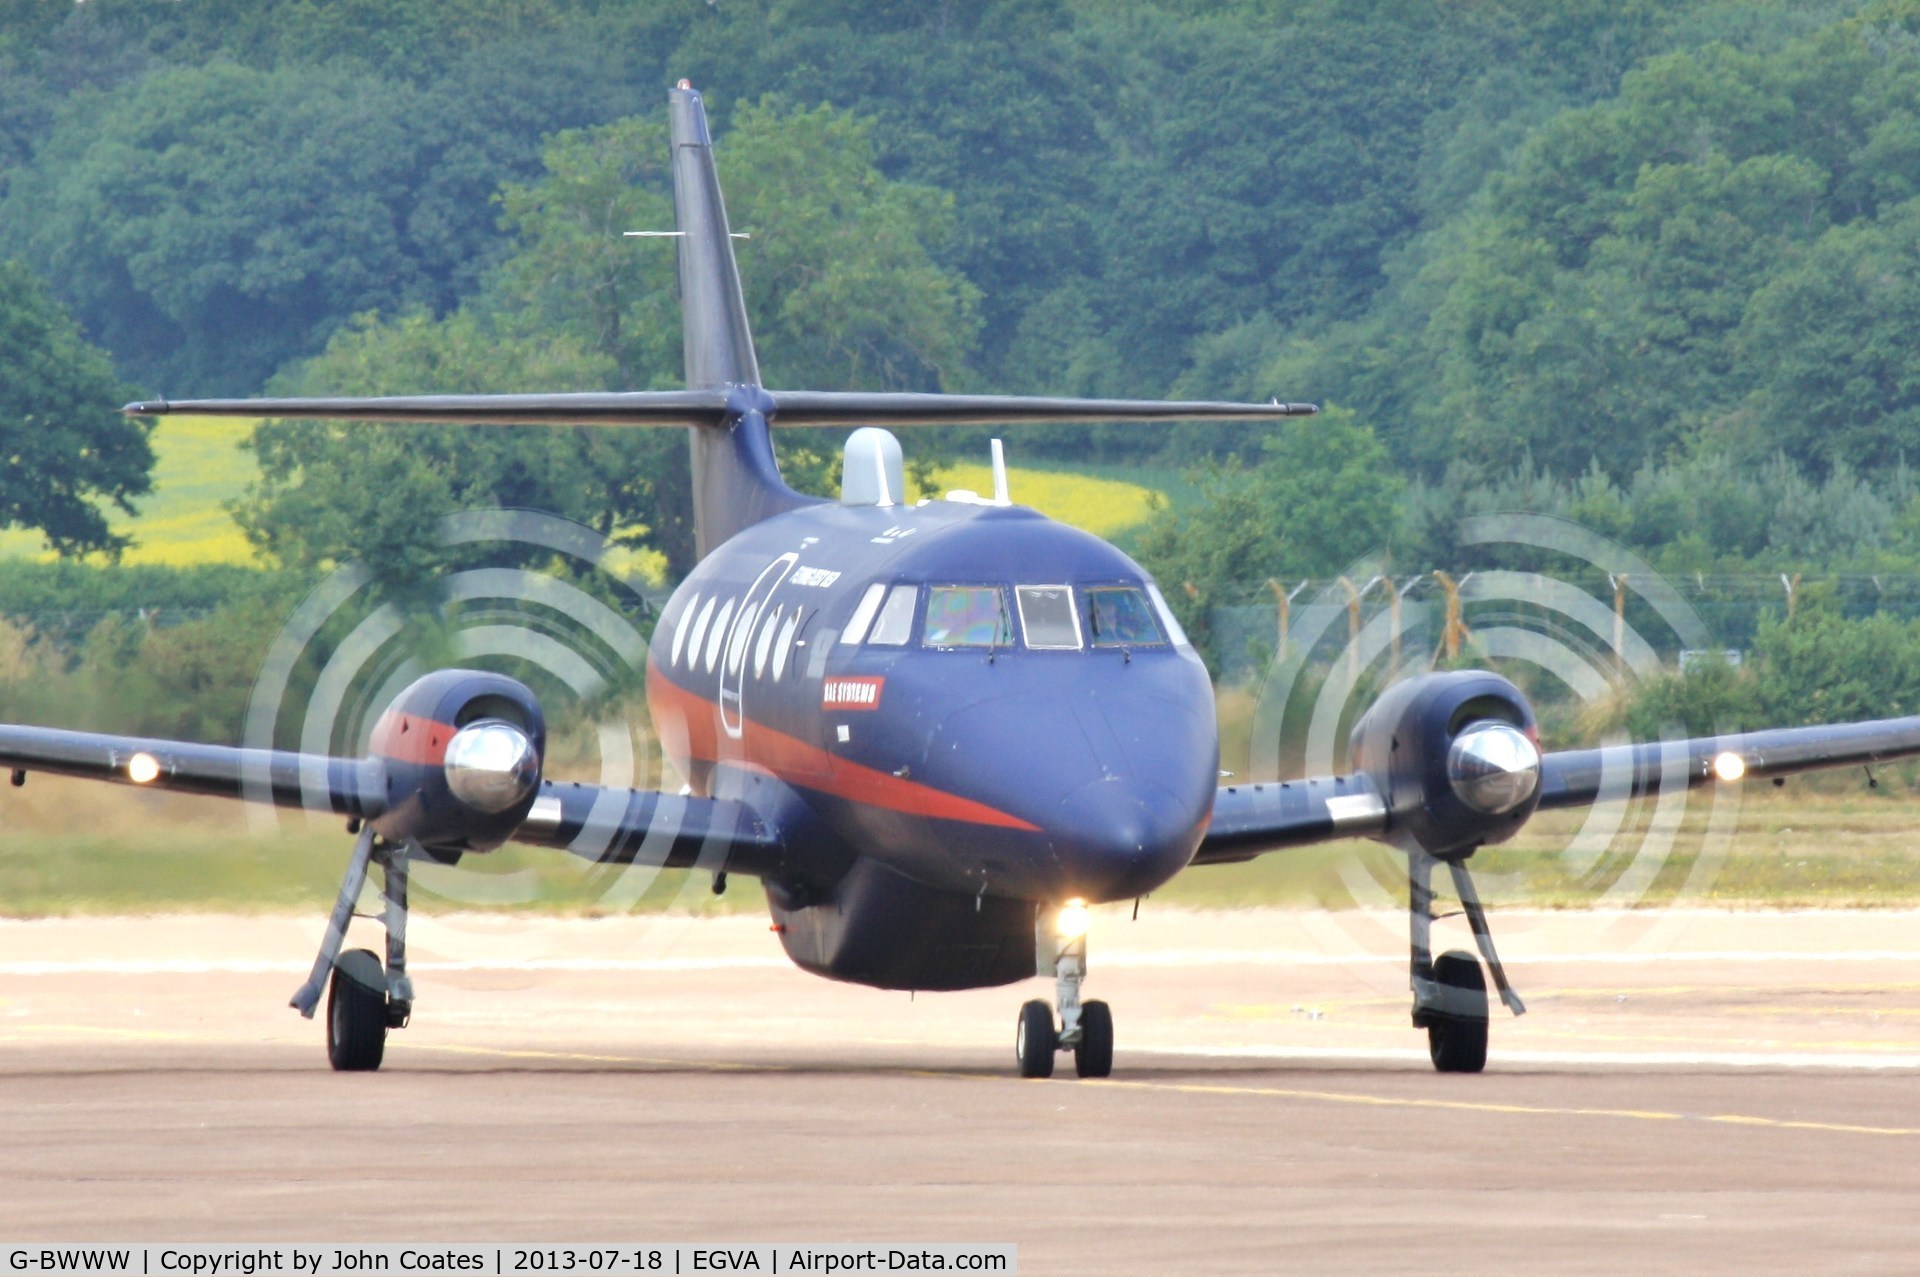 G-BWWW, 1983 British Aerospace BAe-3100 Jetstream 31 C/N 614, Arriving at RIAT 2013